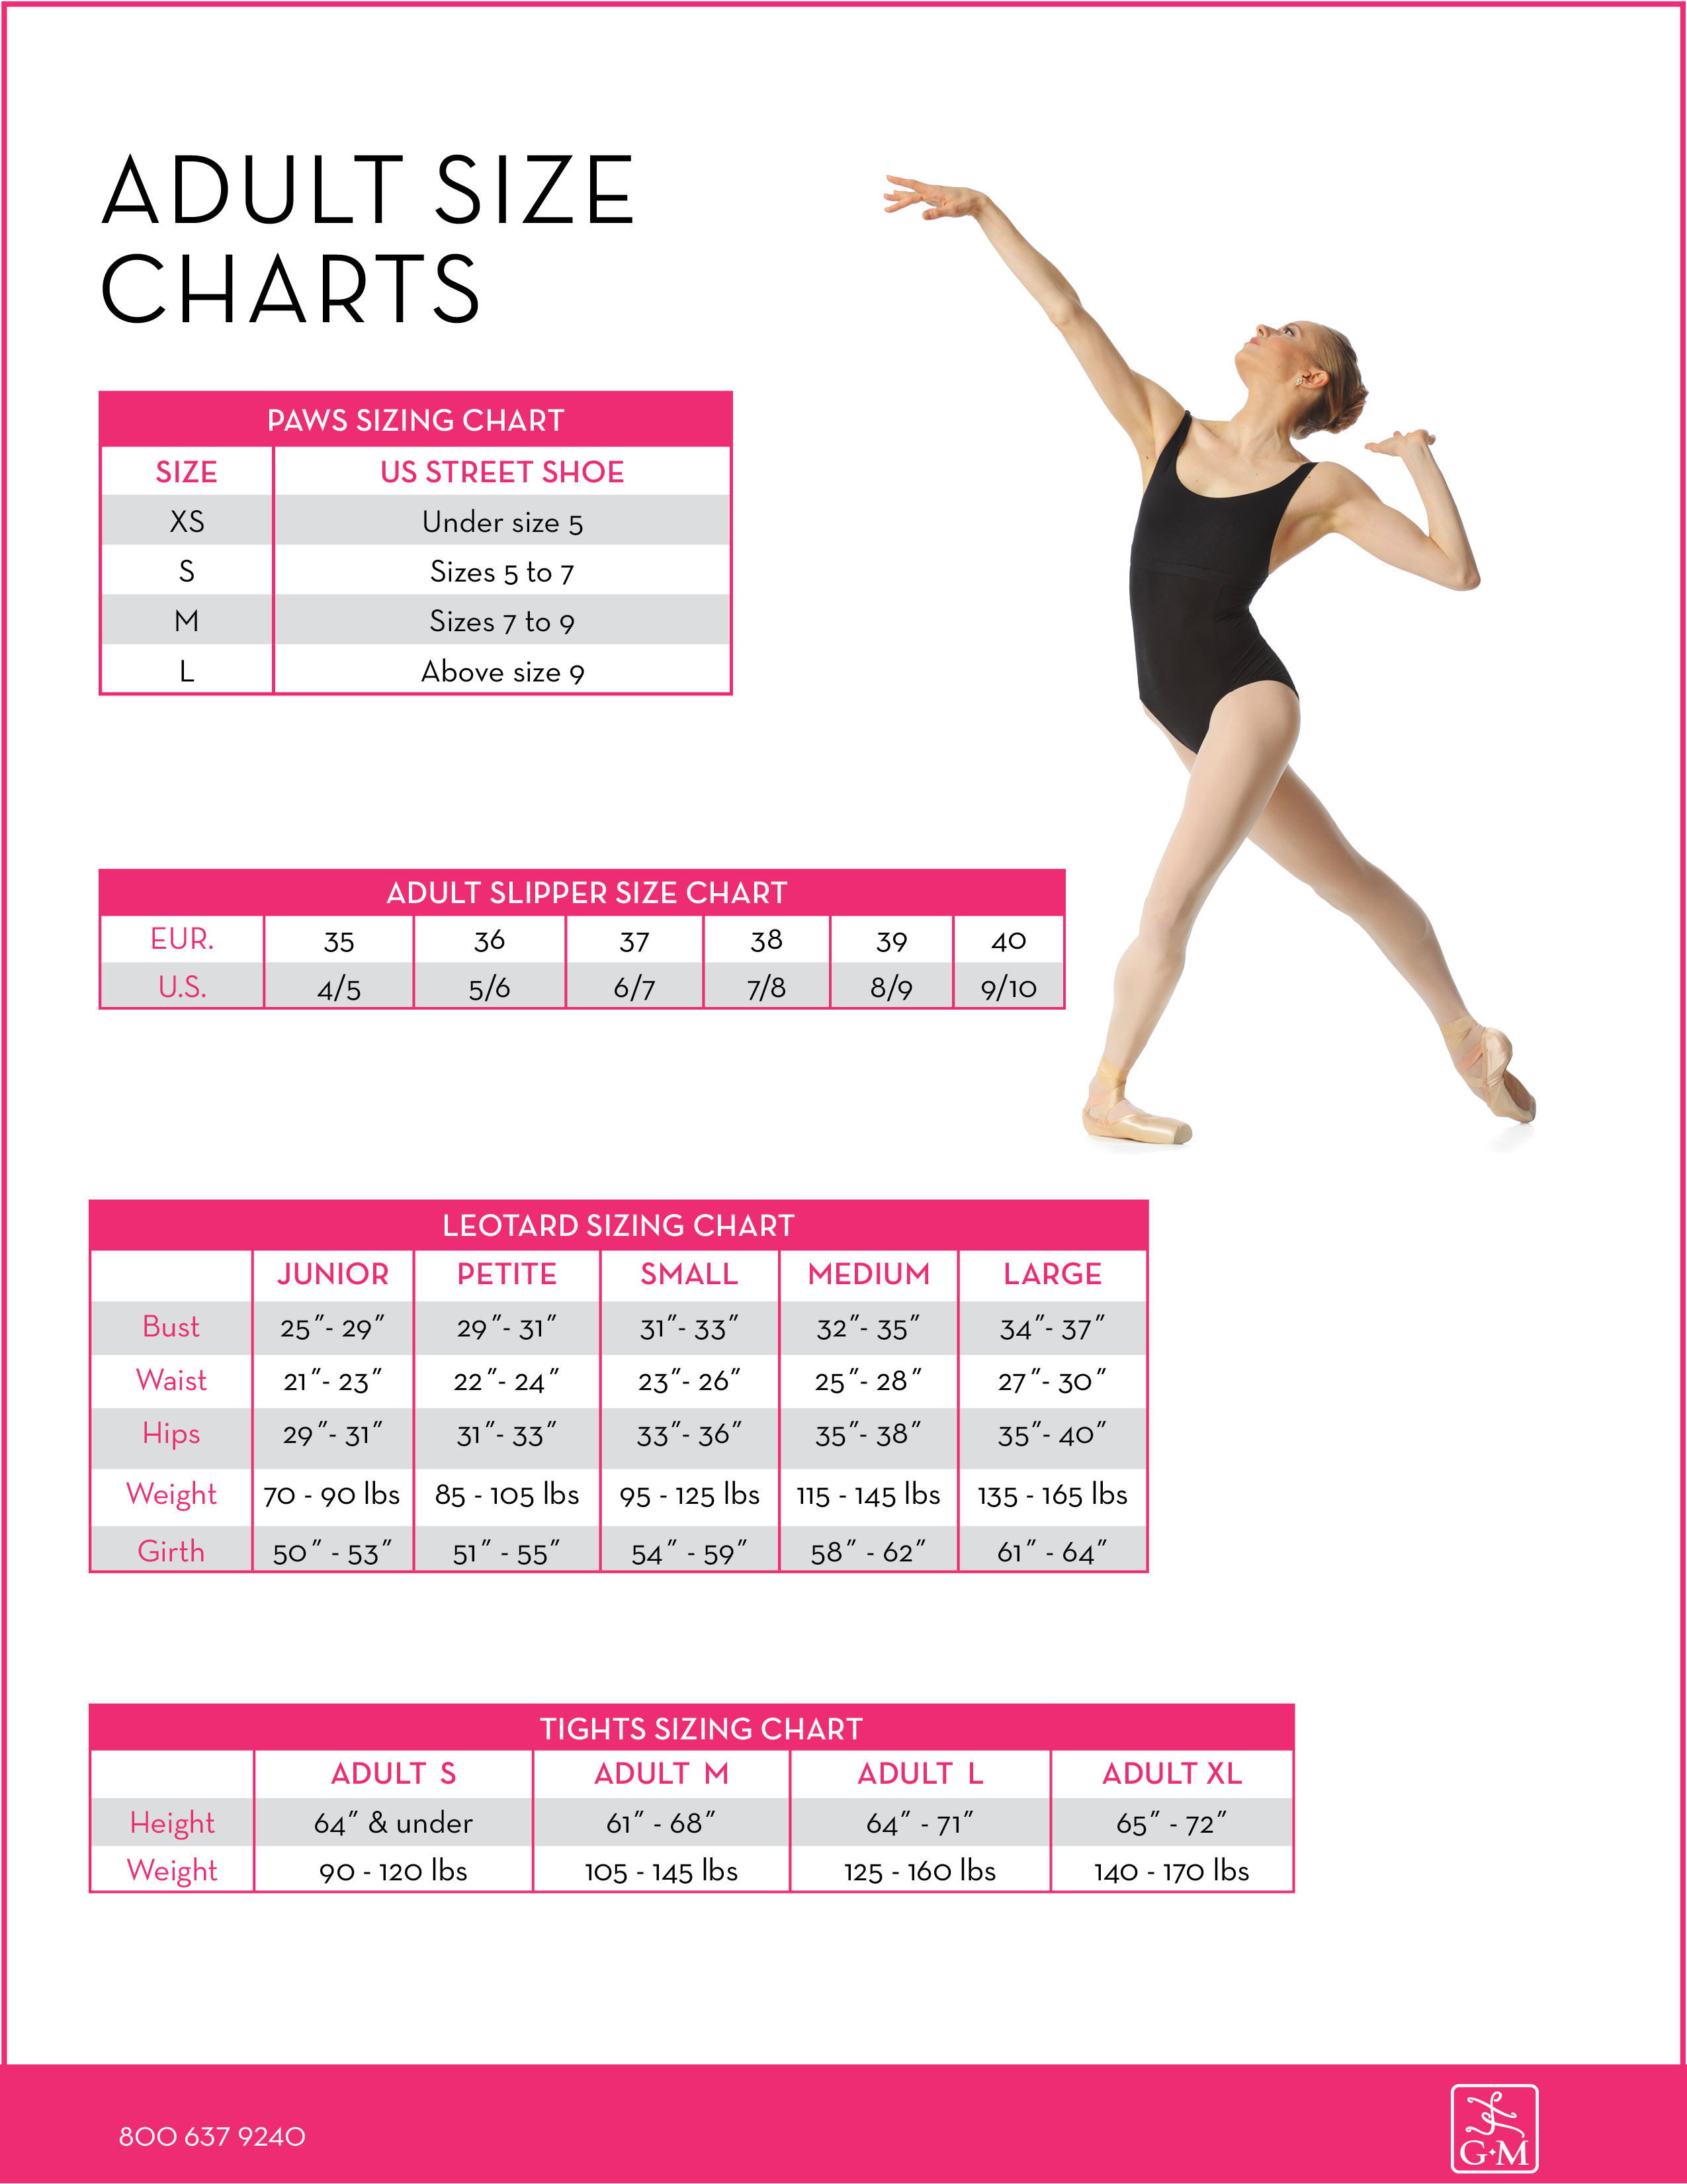 Size-Charts_Adult - Dance Desire Dance Store